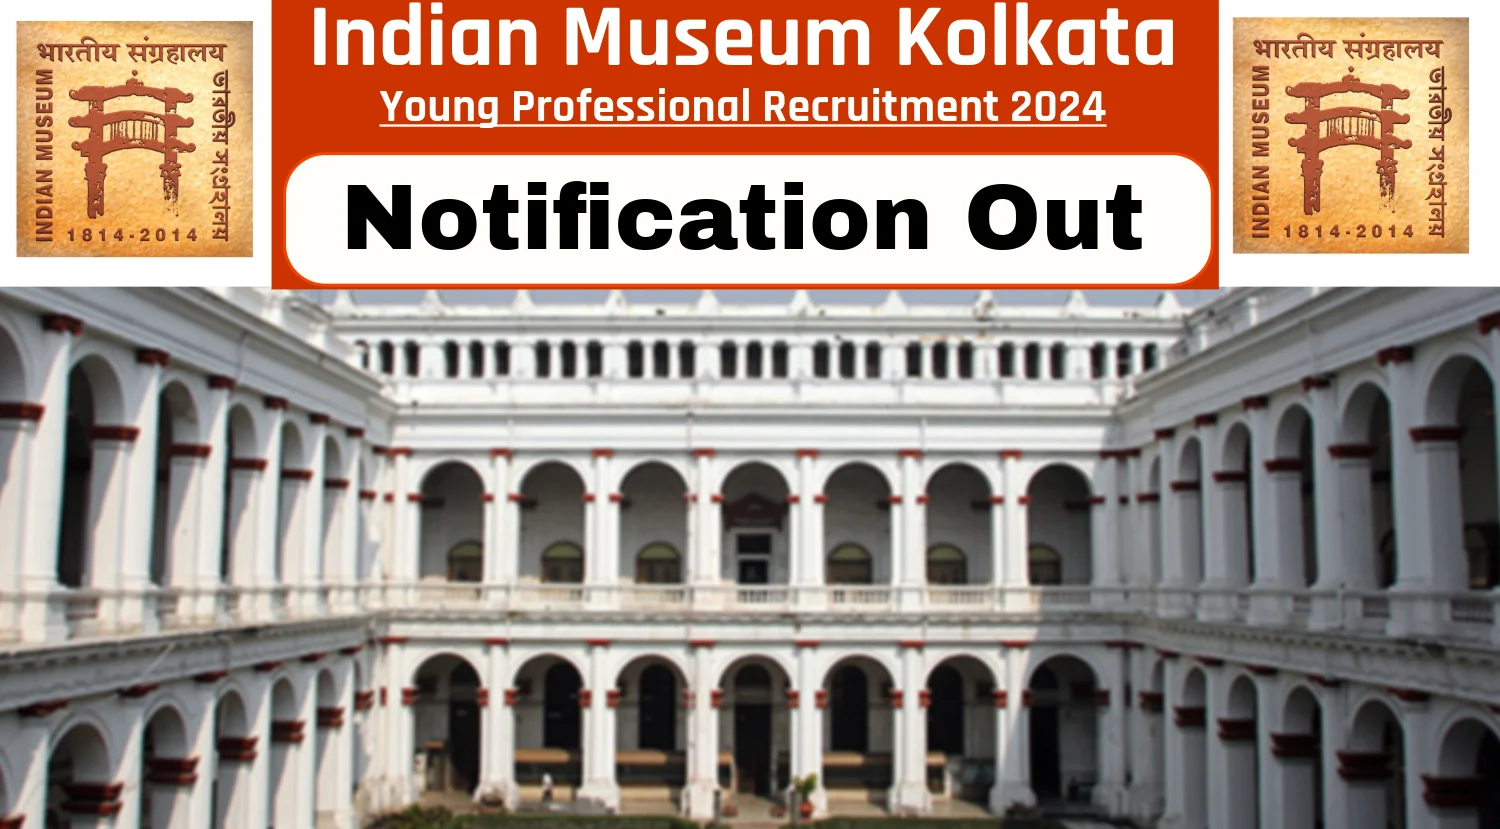 Indian Museum Kolkata Young Professional Recruitment 2024